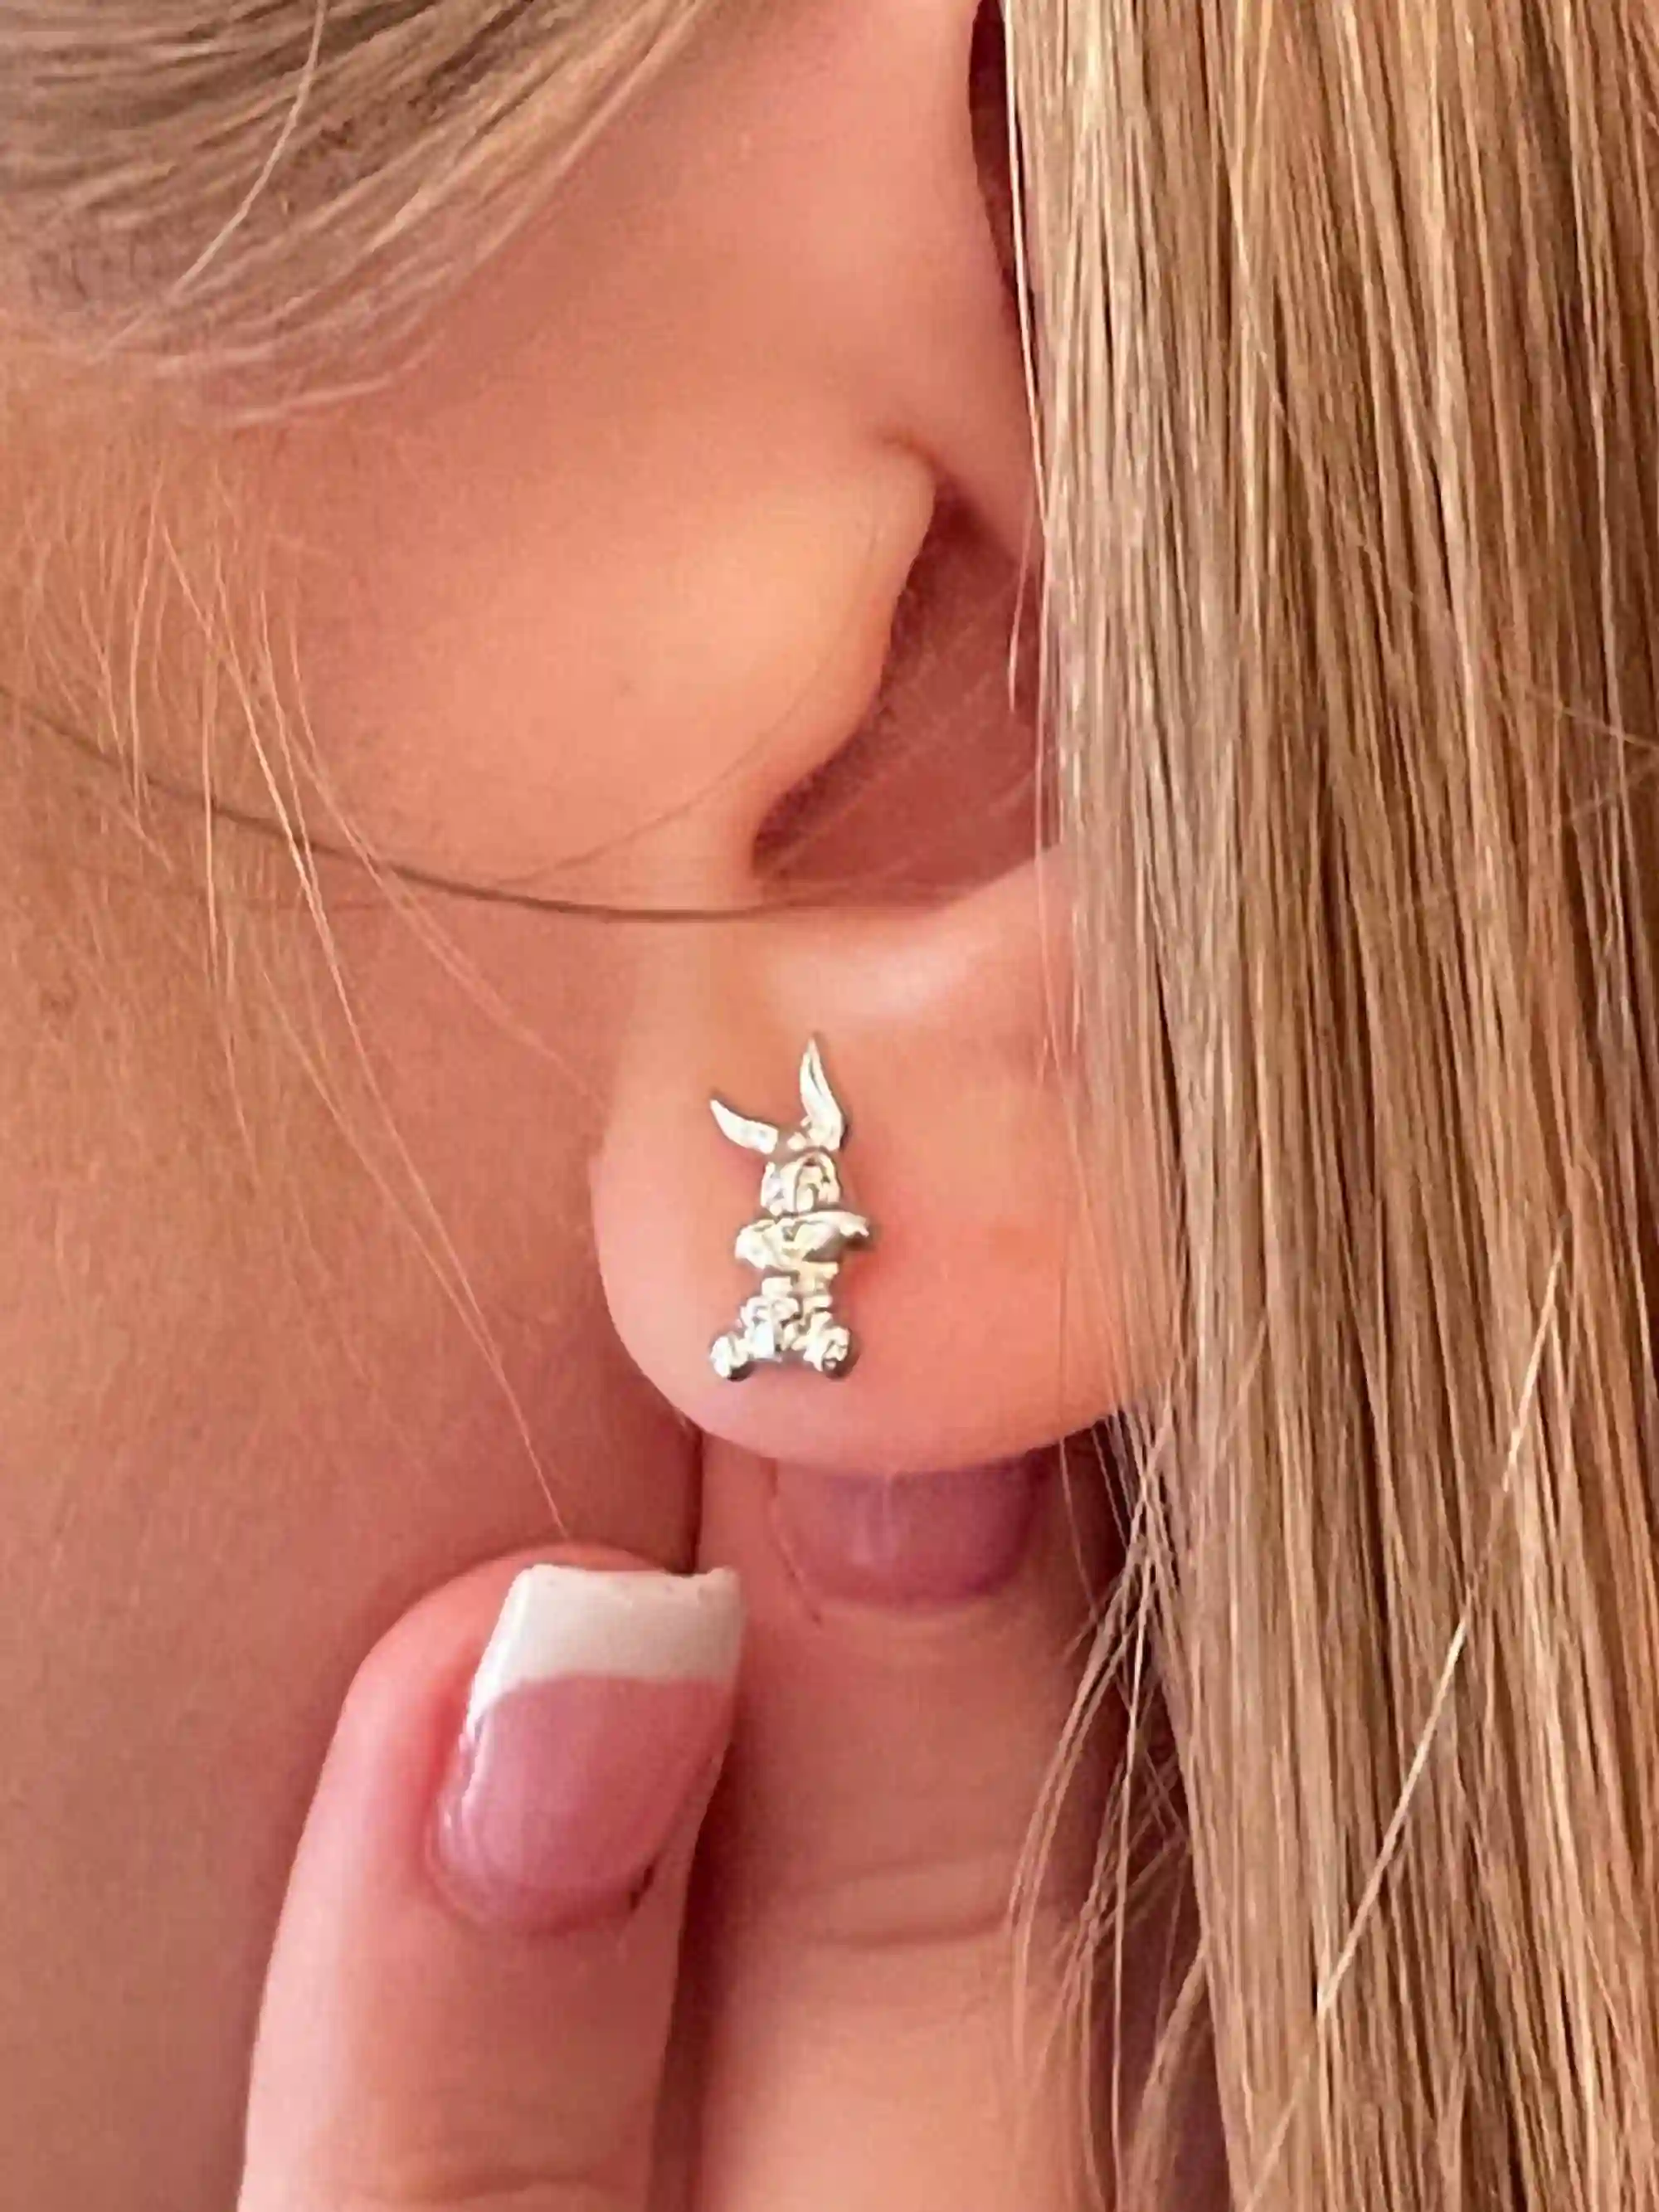 18kt White Gold Disney Stud Earrings Gift for Girls Bugs Bunny Original Looney Tunes/Stud Gold Earrings for Girl Cartoon Bugs Bunny Gift 18k 